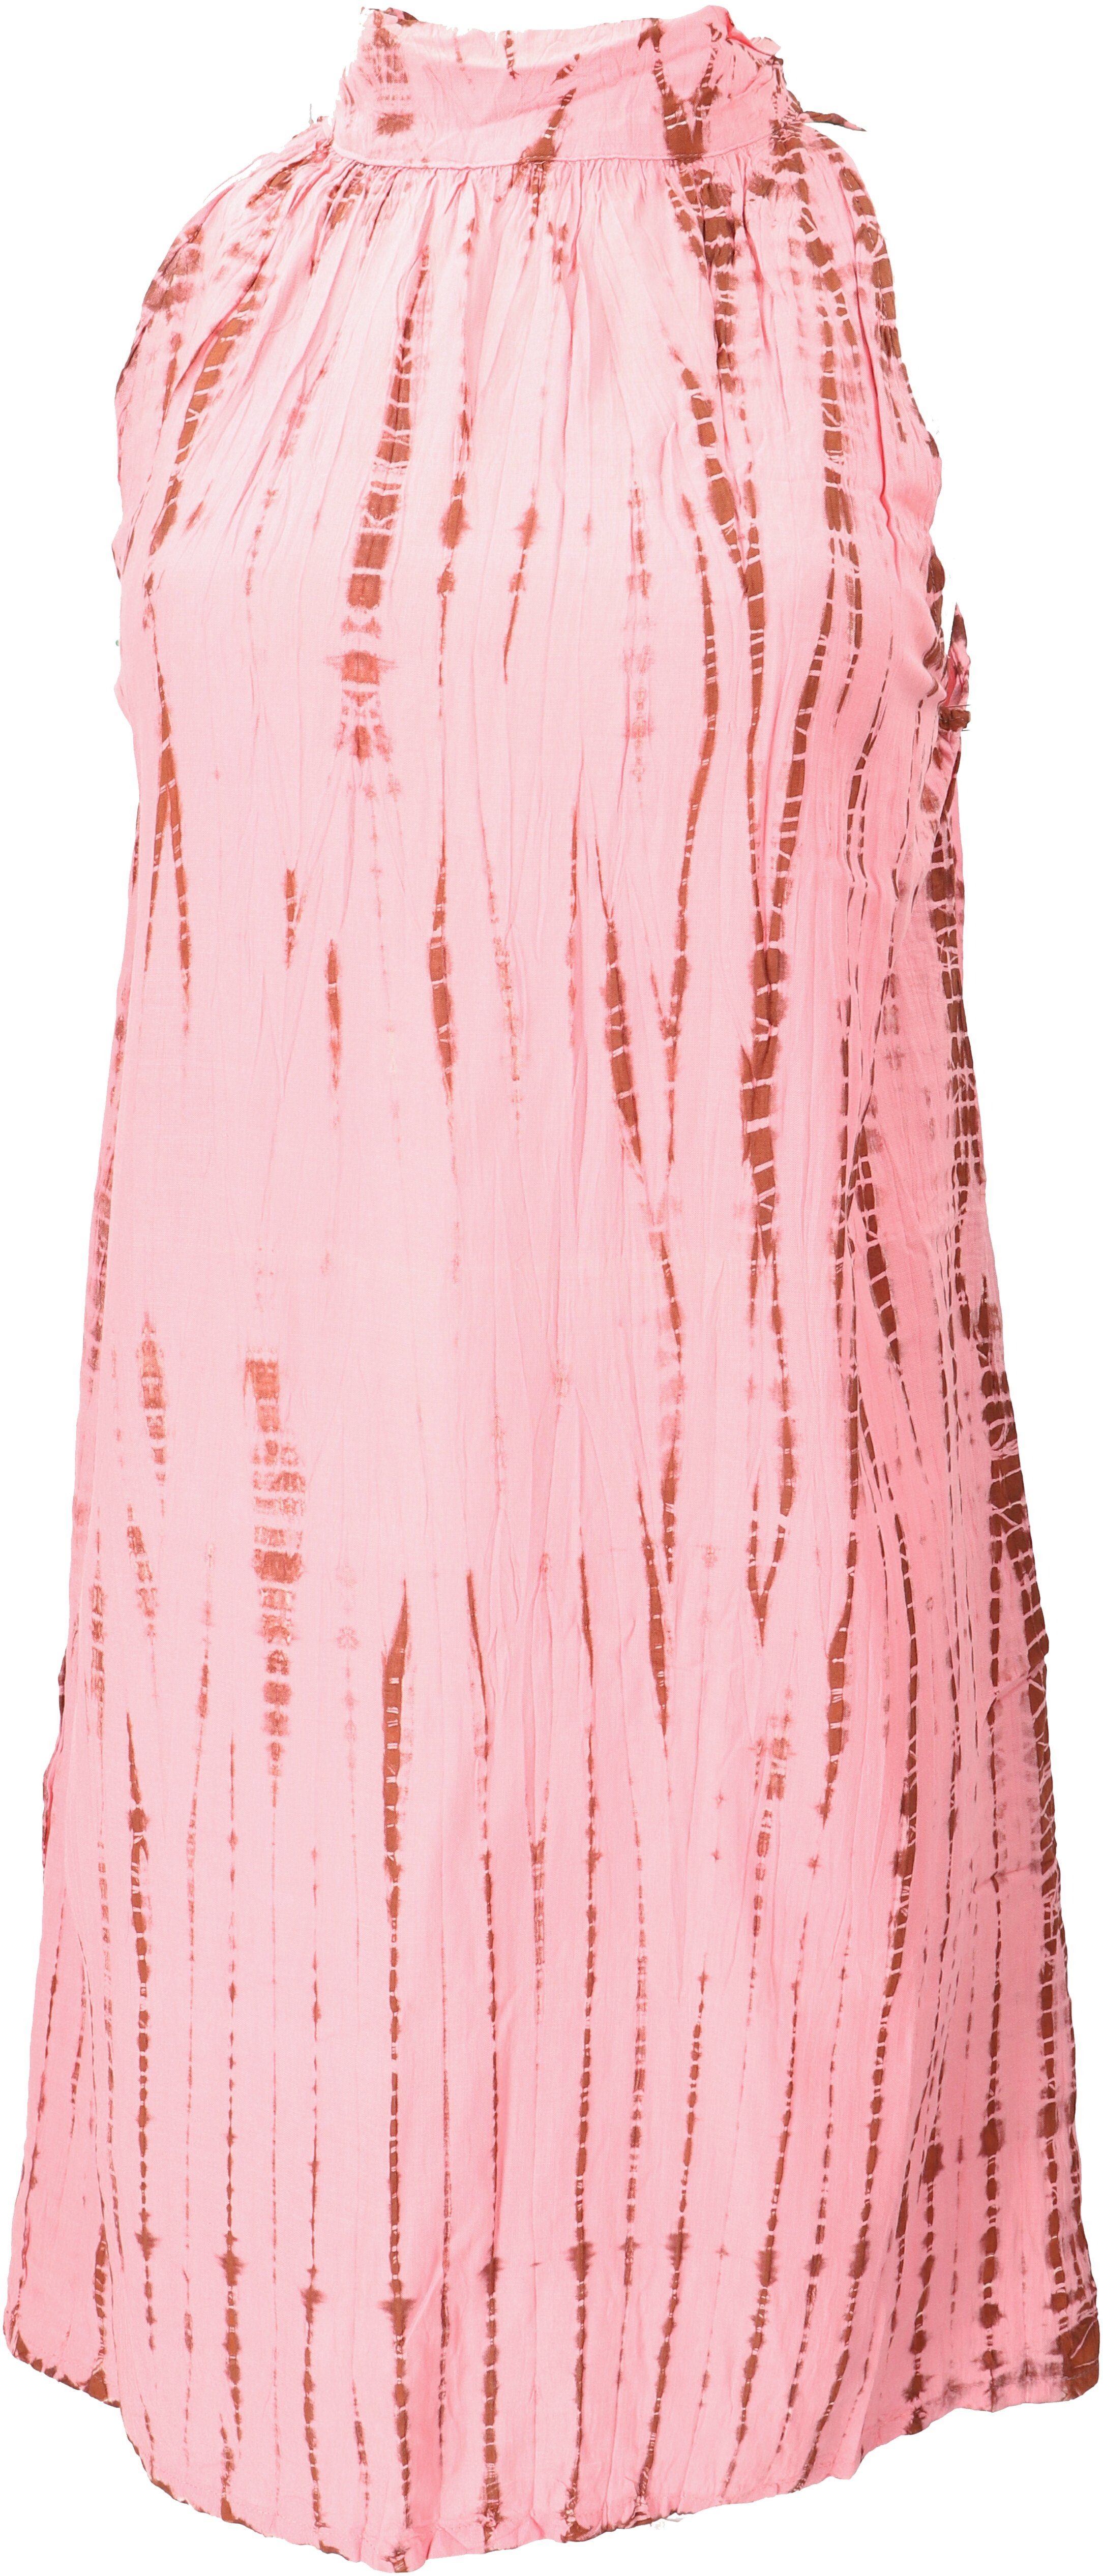 Guru-Shop Midikleid Minikleid Boho chic, luftiges weites high nack.. alternative Bekleidung rosa